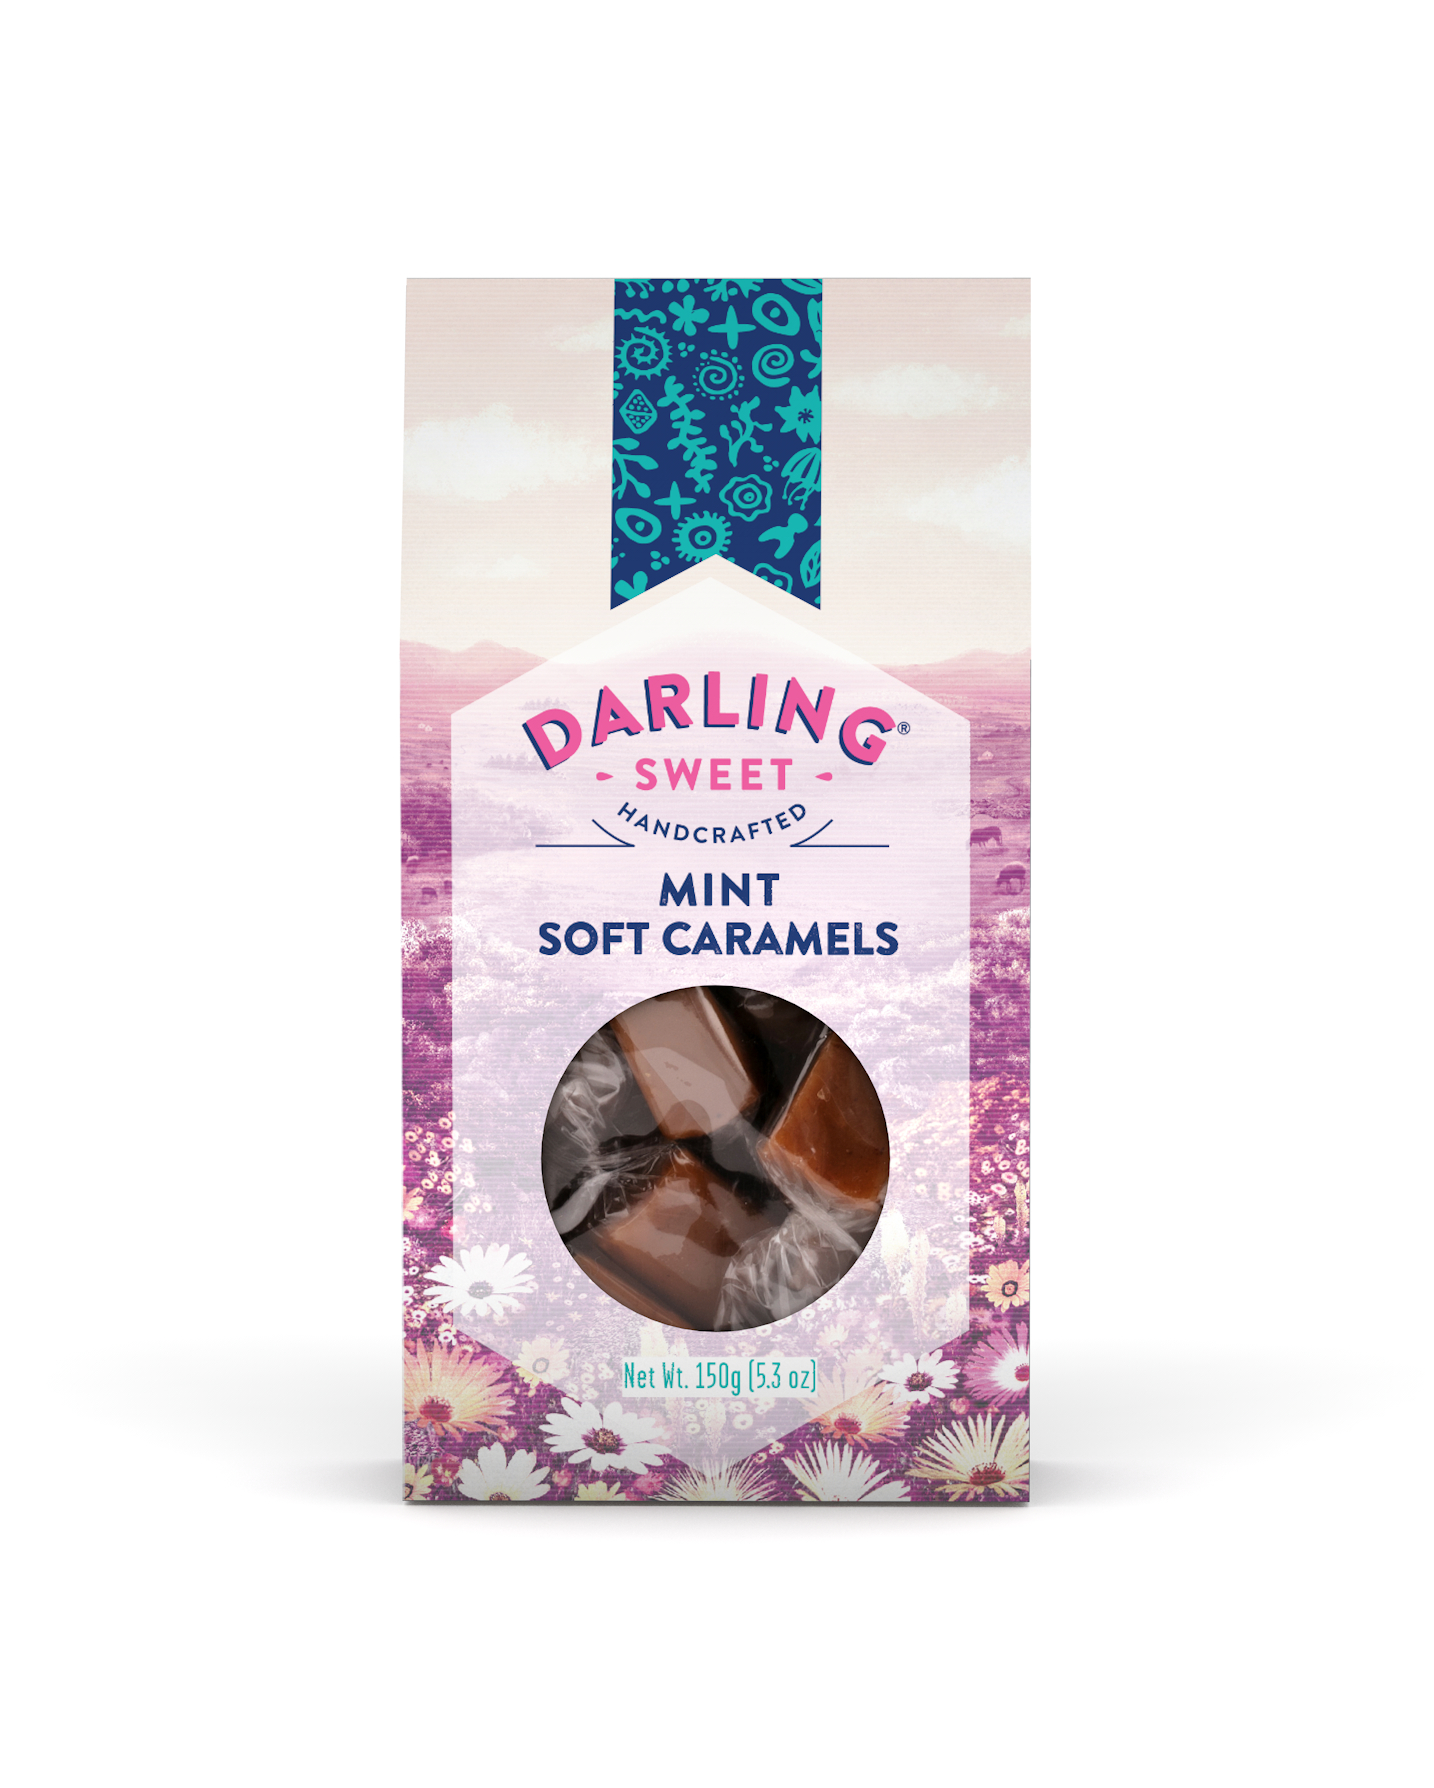 Darling Sweet Mint Soft Caramels 150g